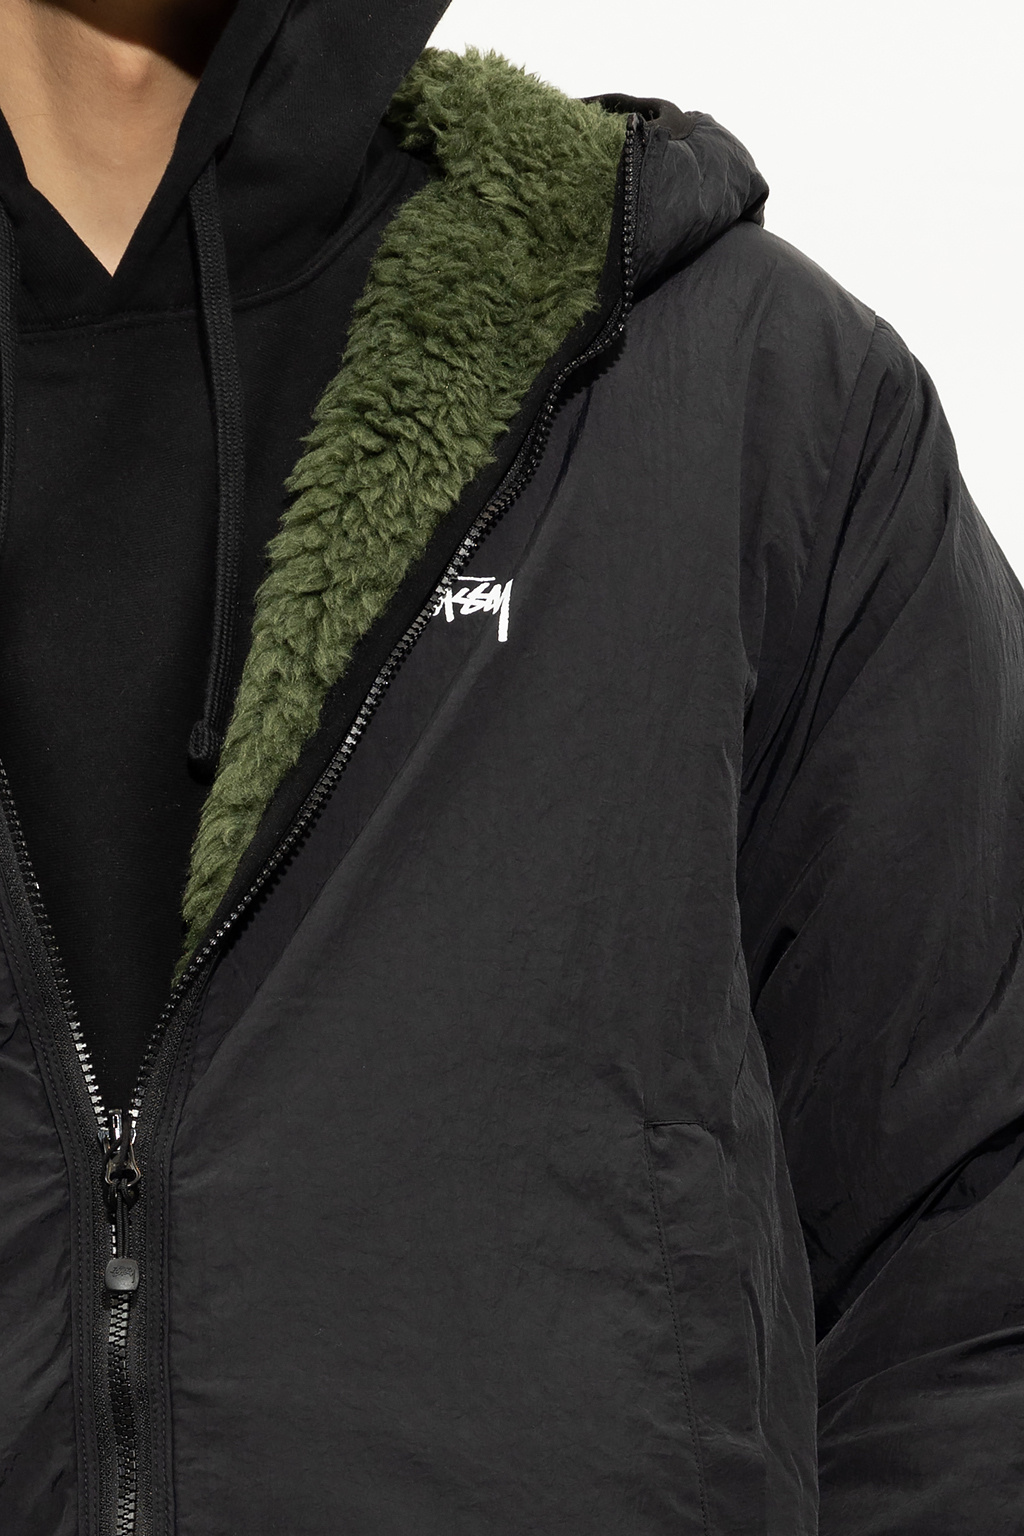 IetpShops Italy - Reversible jacket with logo Stussy - ASOS